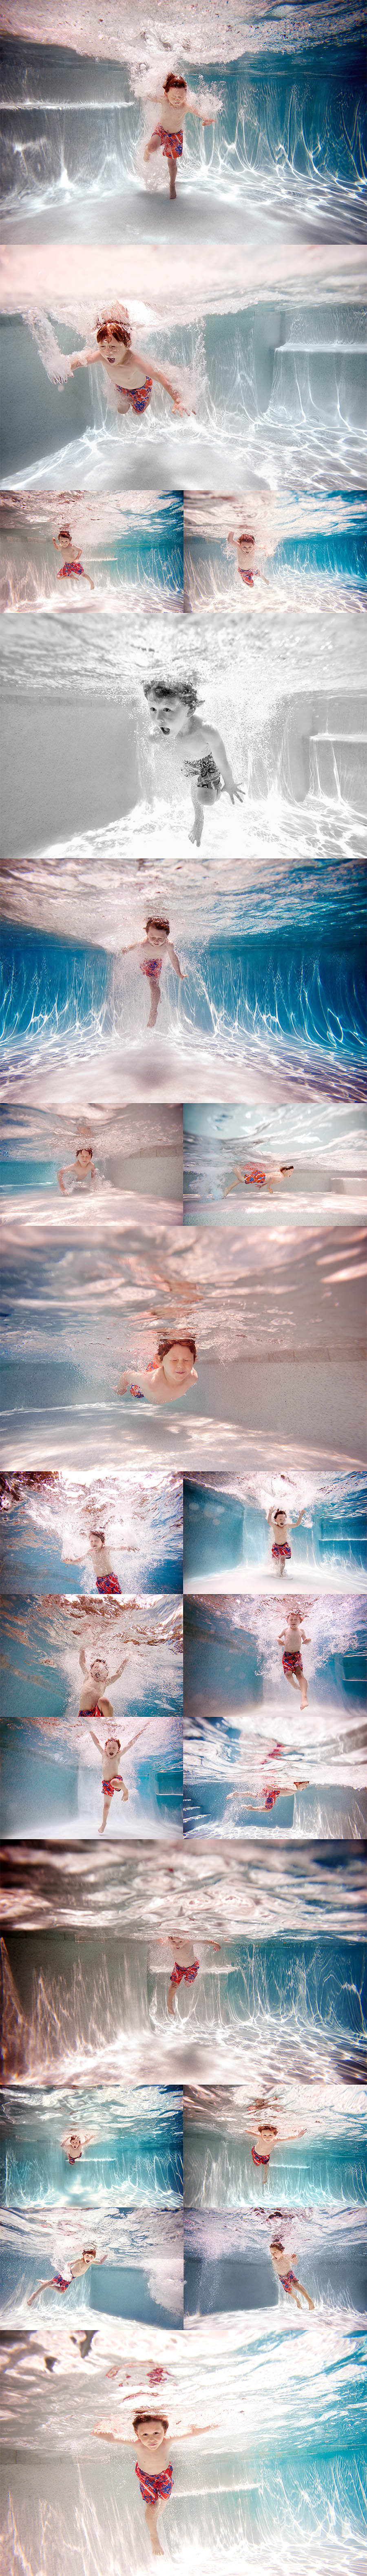 Child Underwater Photography Houston